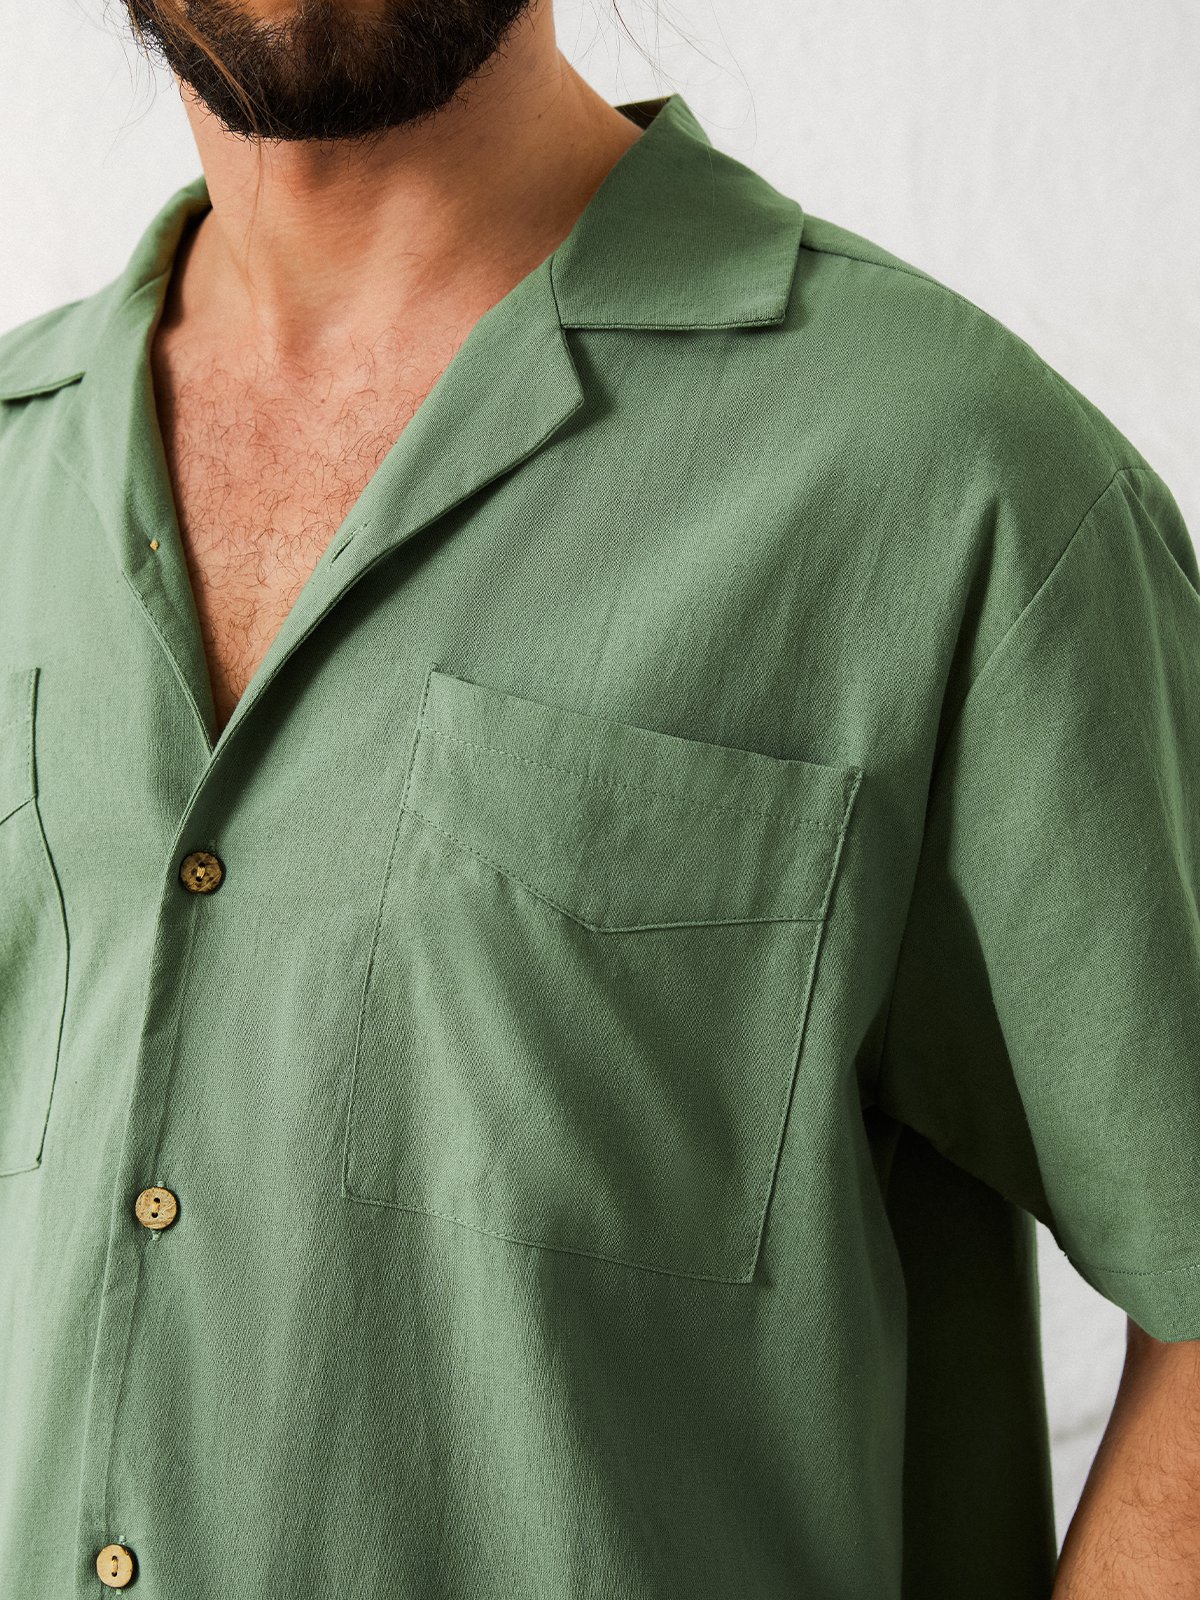 Cotton Linen Style American Casual Basic Linen Shirt